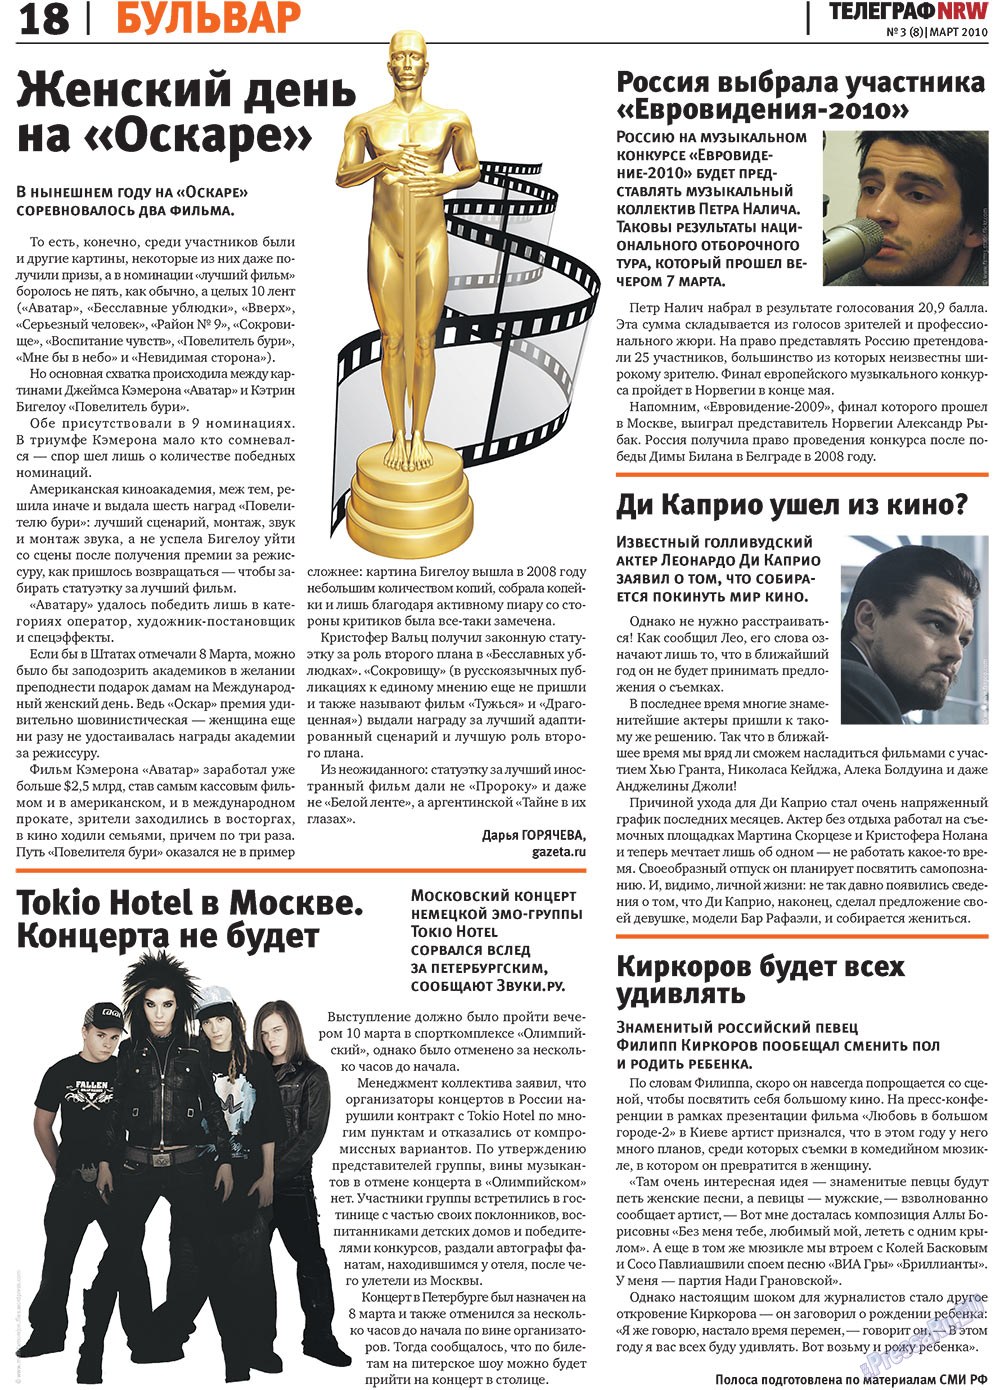 Телеграф NRW, газета. 2010 №3 стр.18